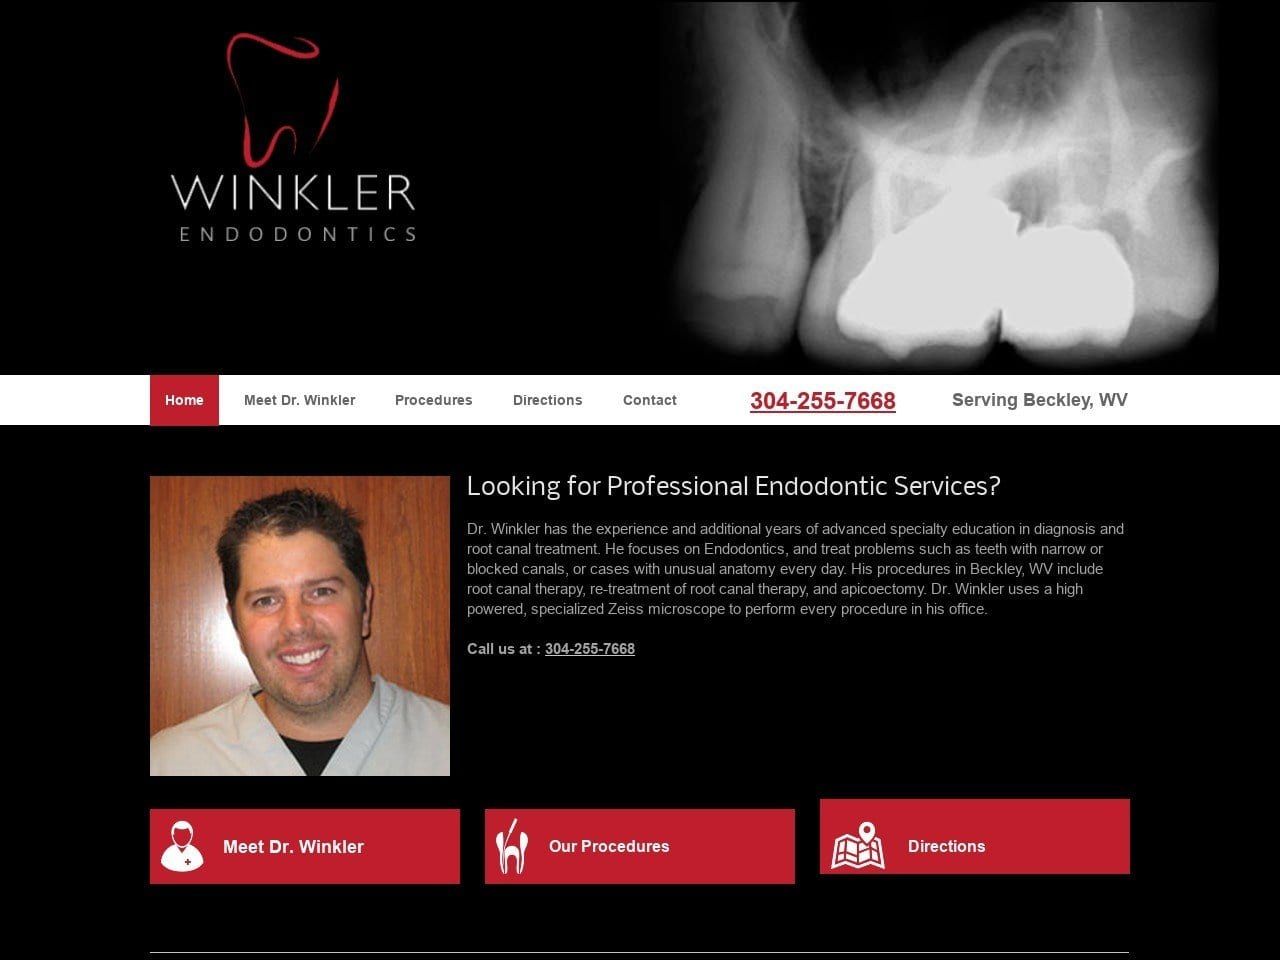 Winkler Endodontics Website Screenshot from winklerendodontics.com